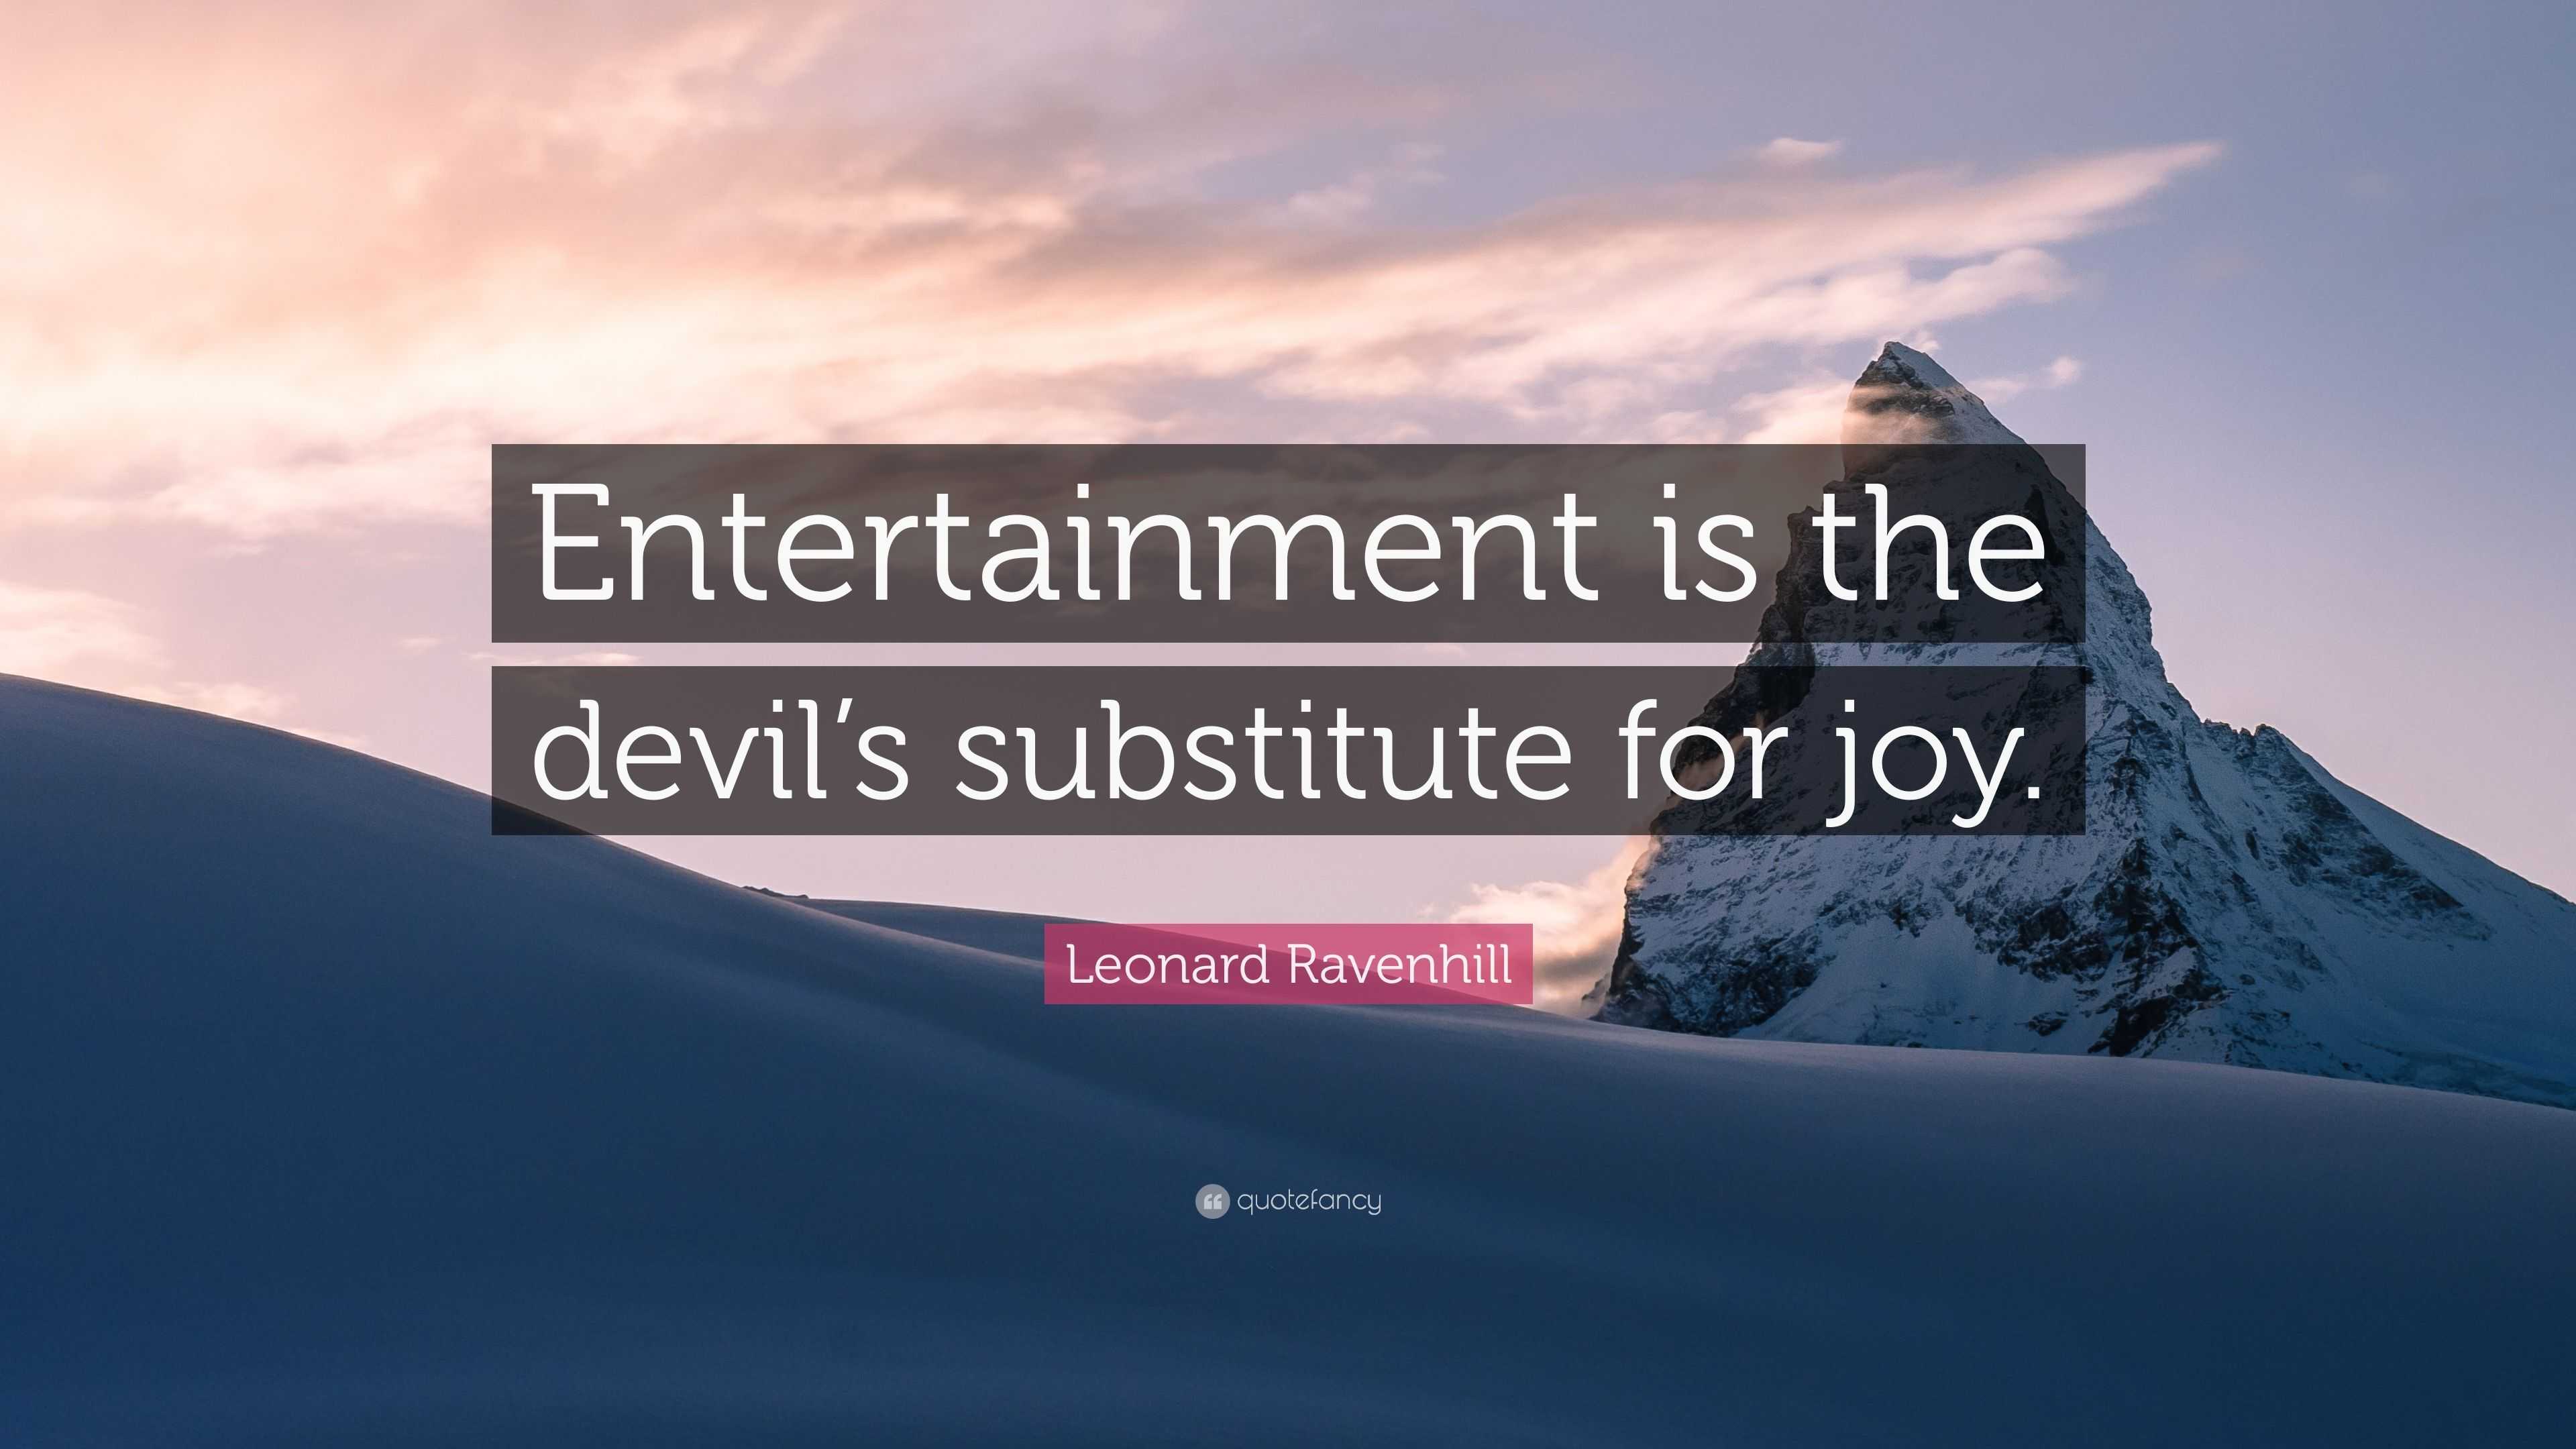 4737455 Leonard Ravenhill Quote Entertainment is the devil s substitute